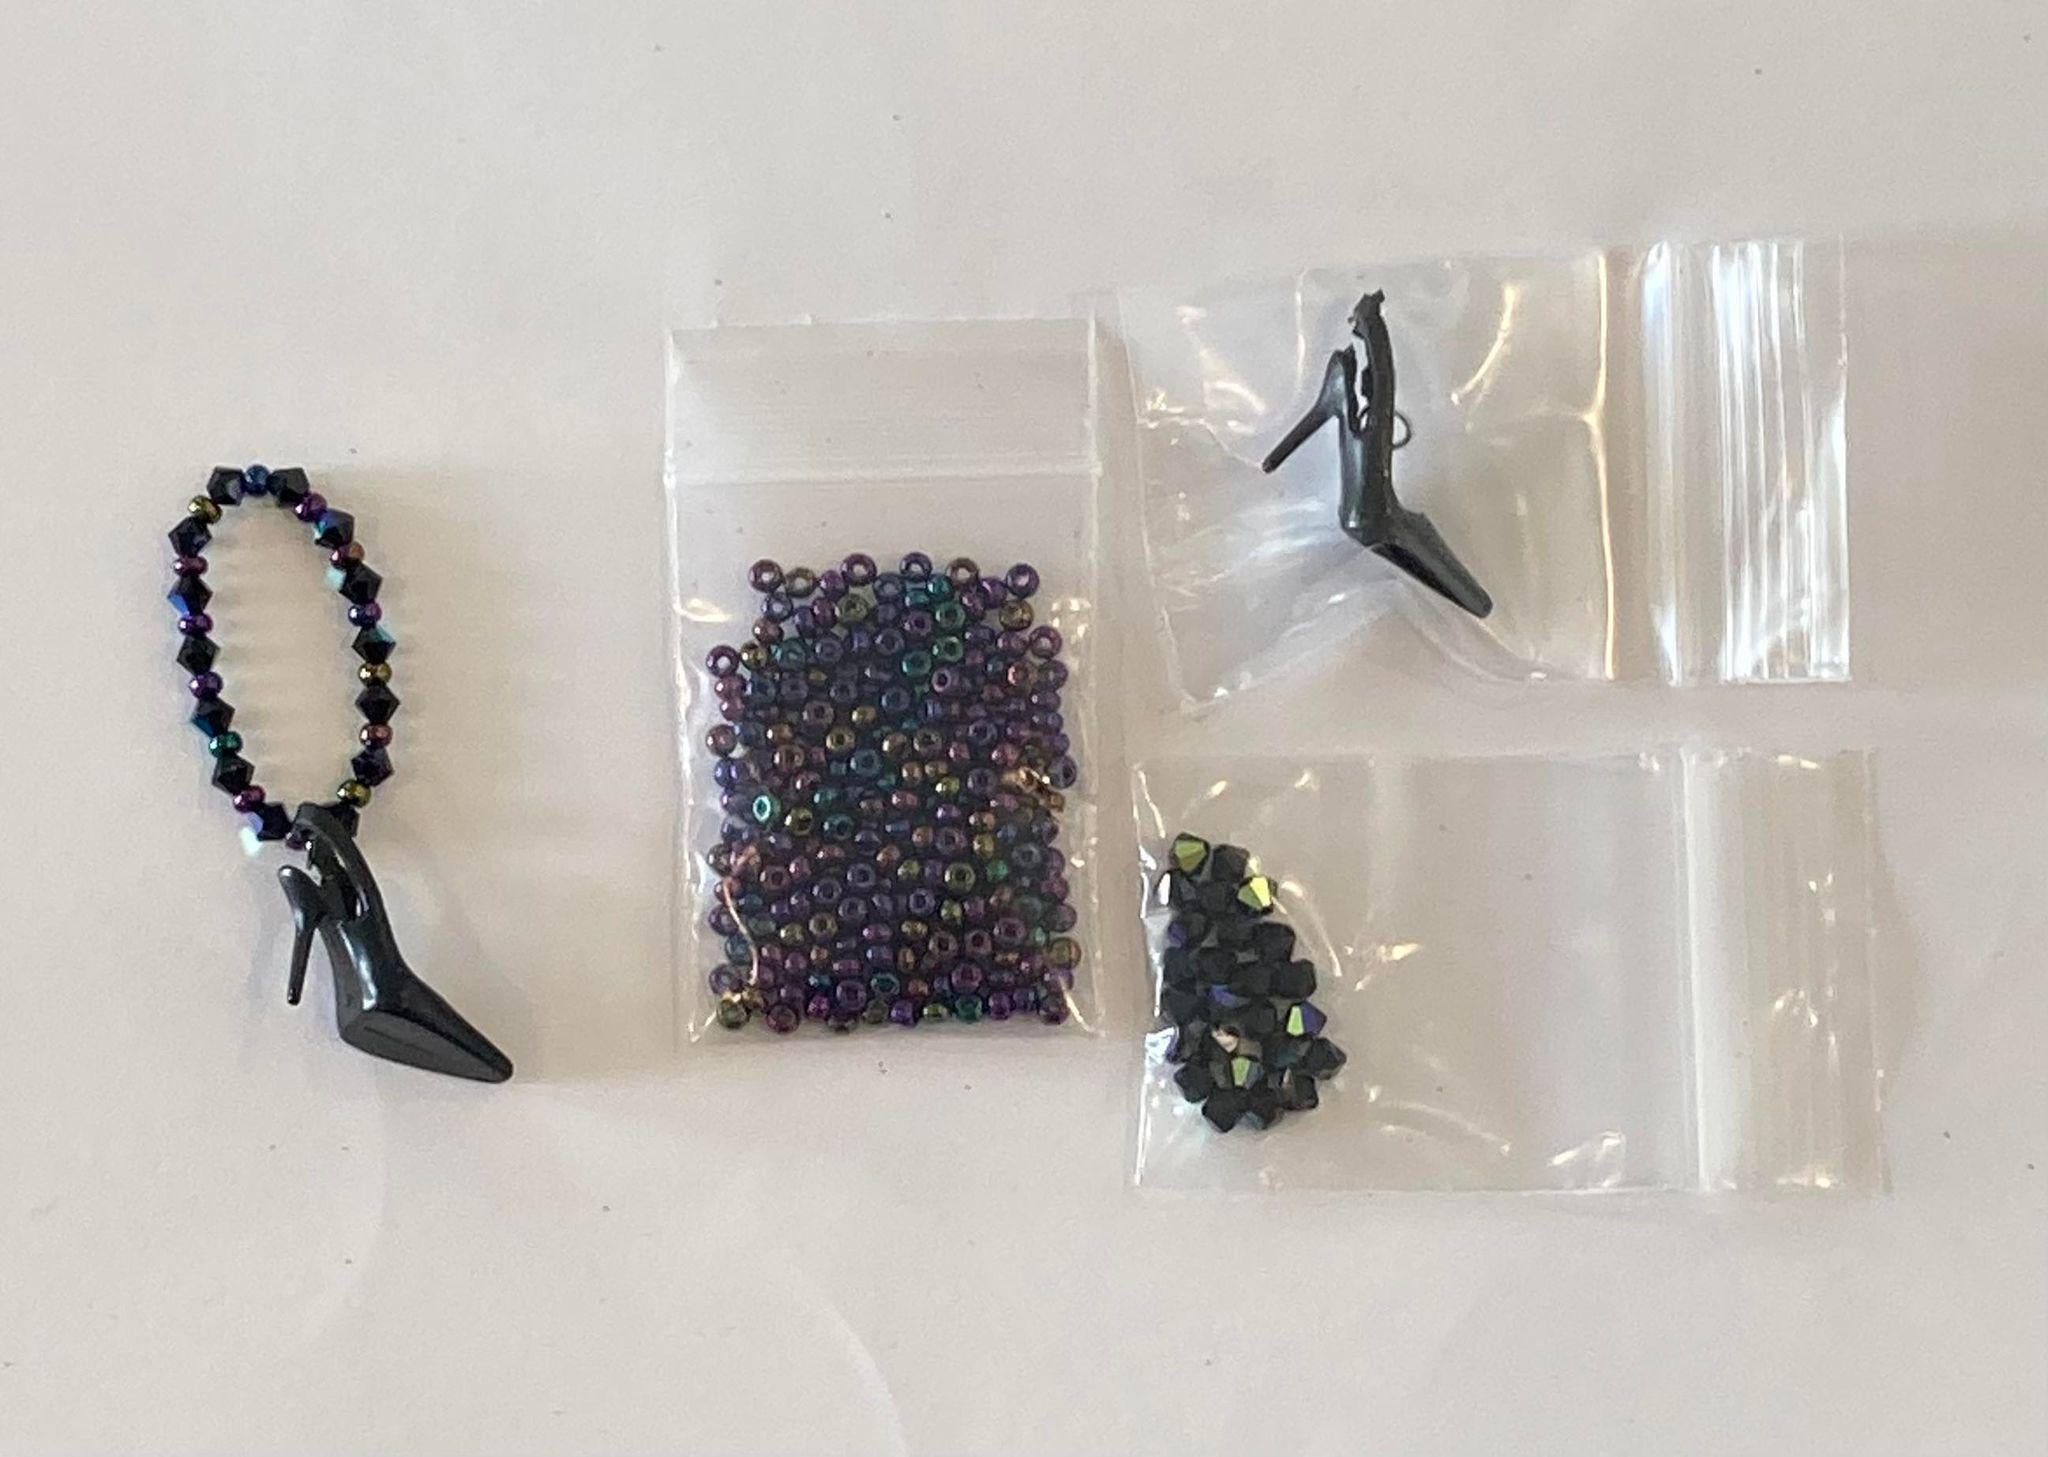 Pandahall Crystal Beads Surpass Swarovski Beads for Jewelry Making